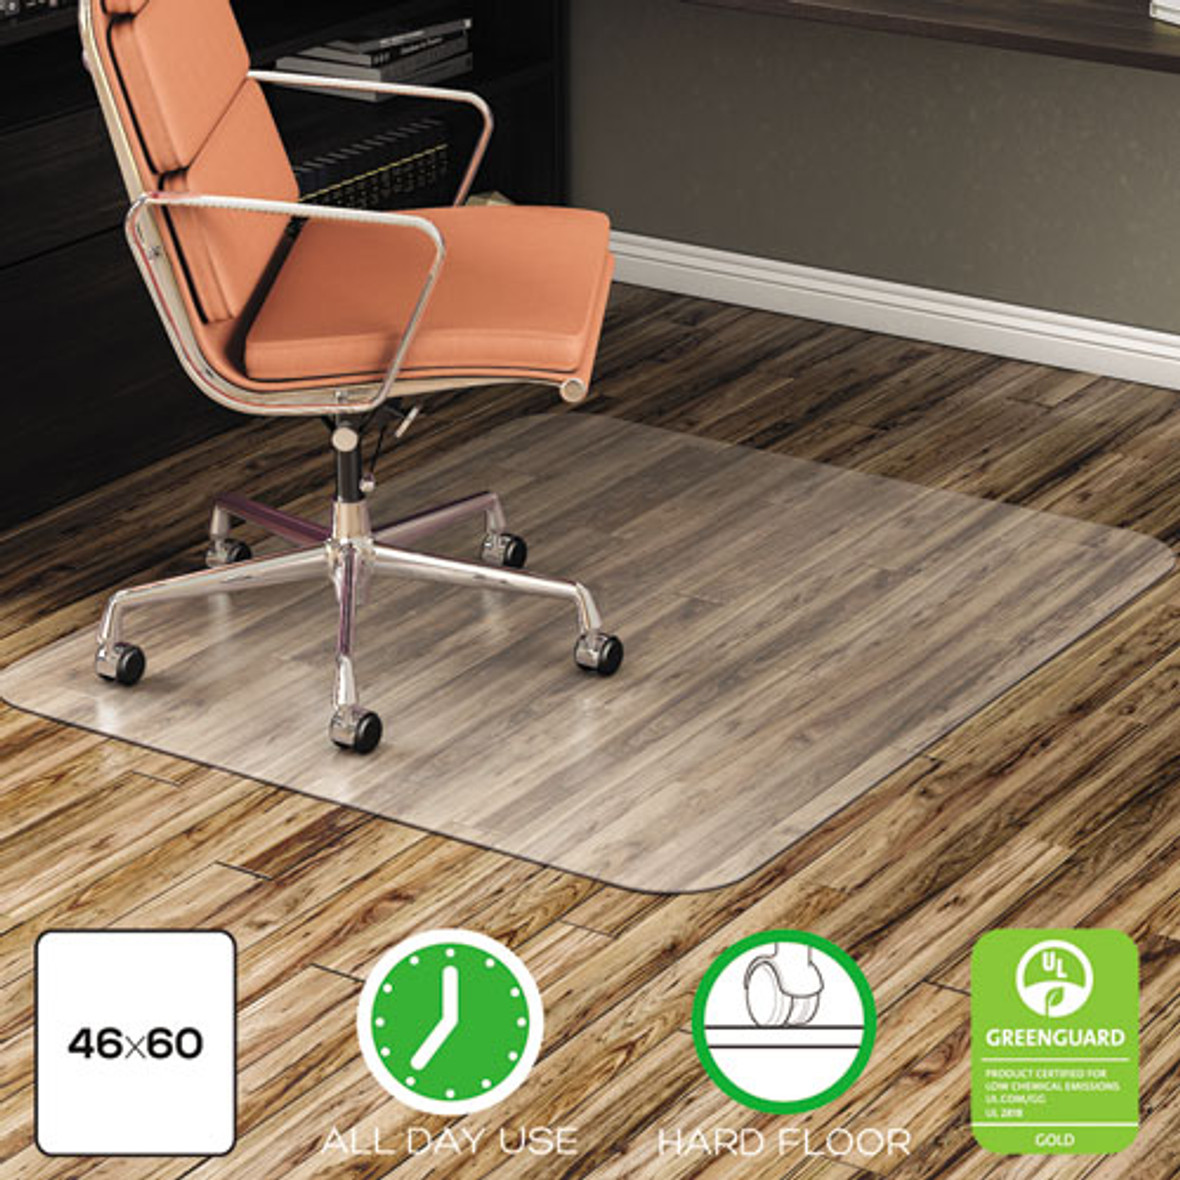 Deflecto® Economat All Day Use Chair Mat For Hard Floors, 46 x 60, Clear, 1 Each/Carton